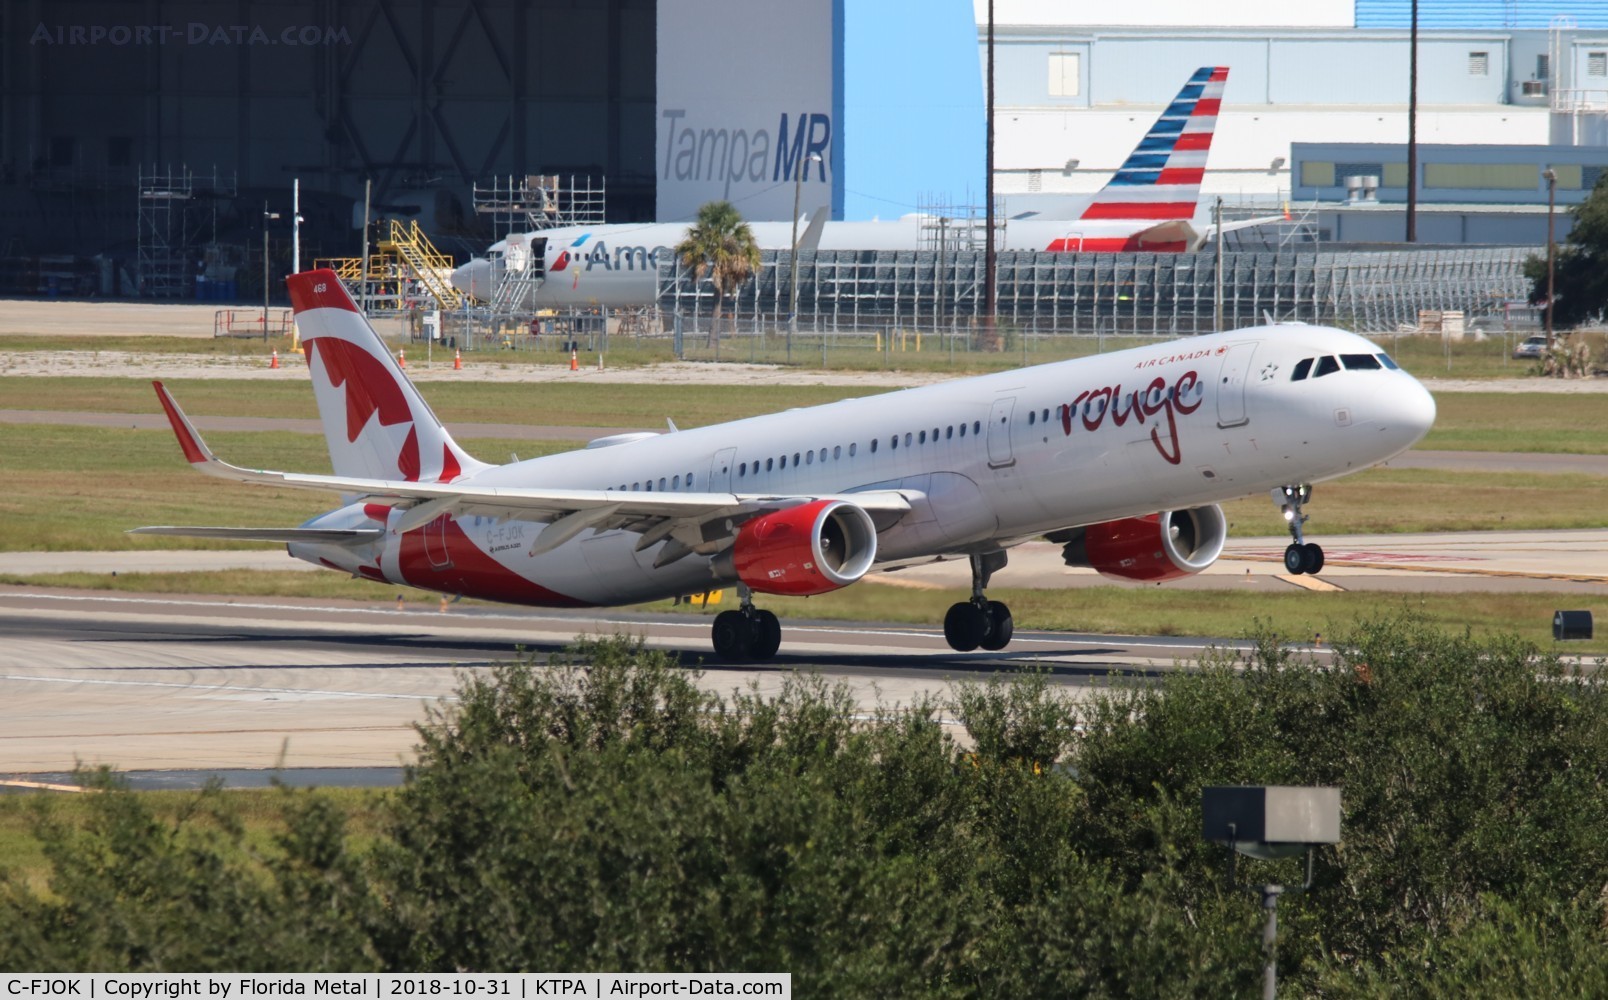 C-FJOK, 2015 Airbus A321-211 C/N 6844, TPA spotting